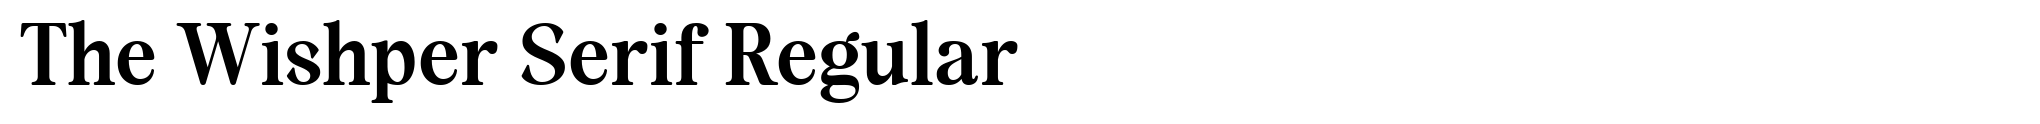 The Wishper Serif Regular image